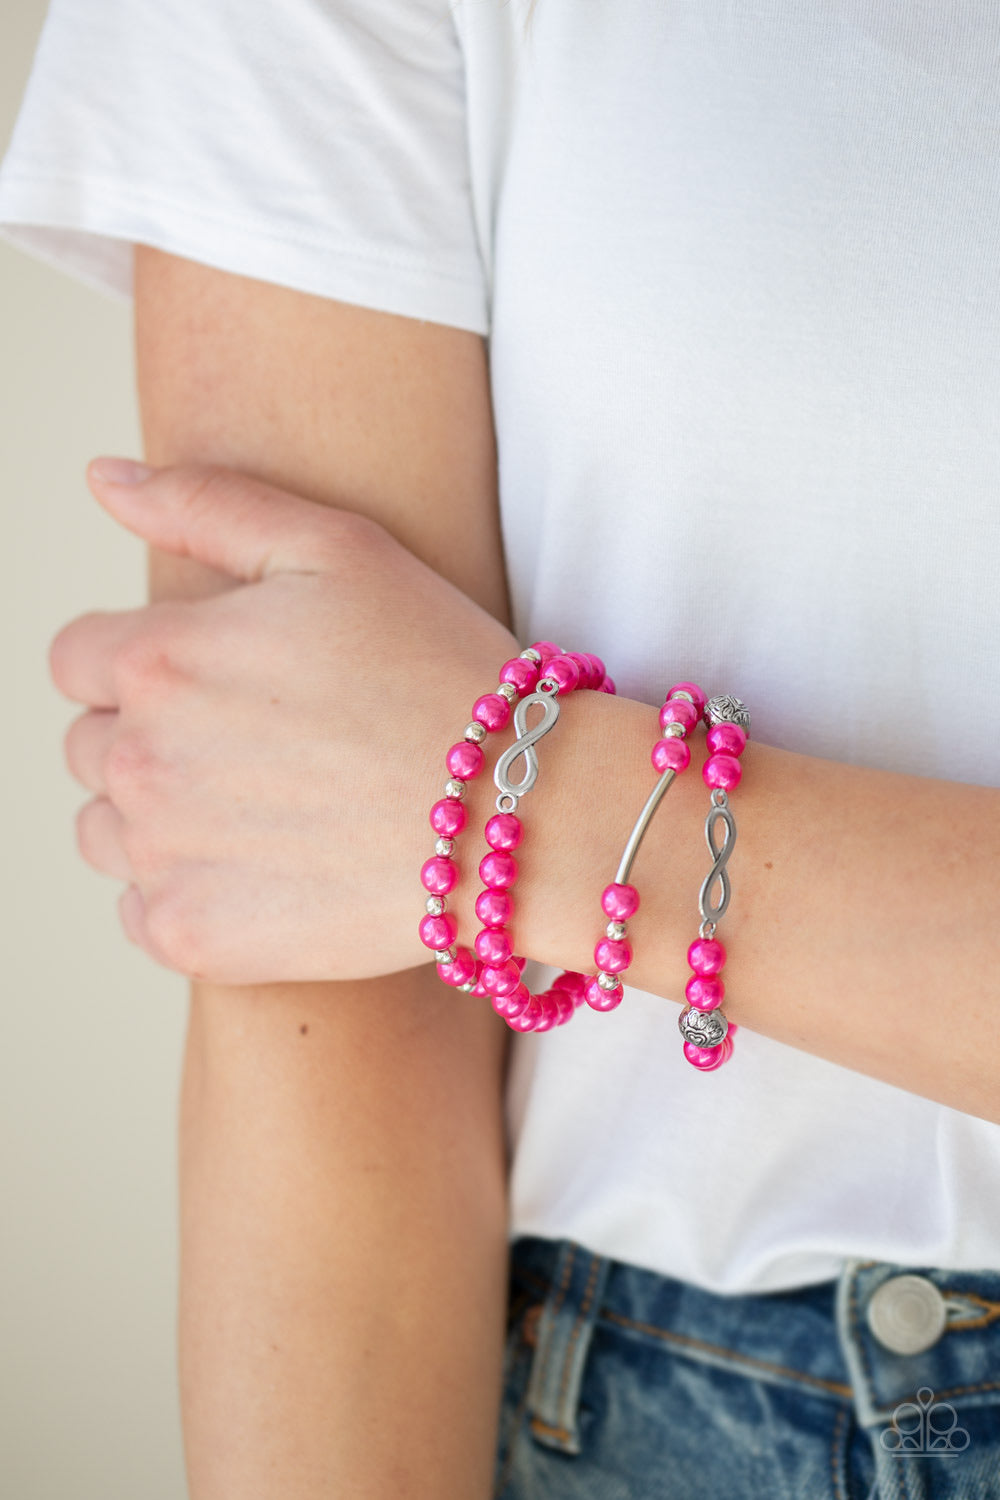 Paparazzi Jewelry Bracelet Limitless Luxury - Pink